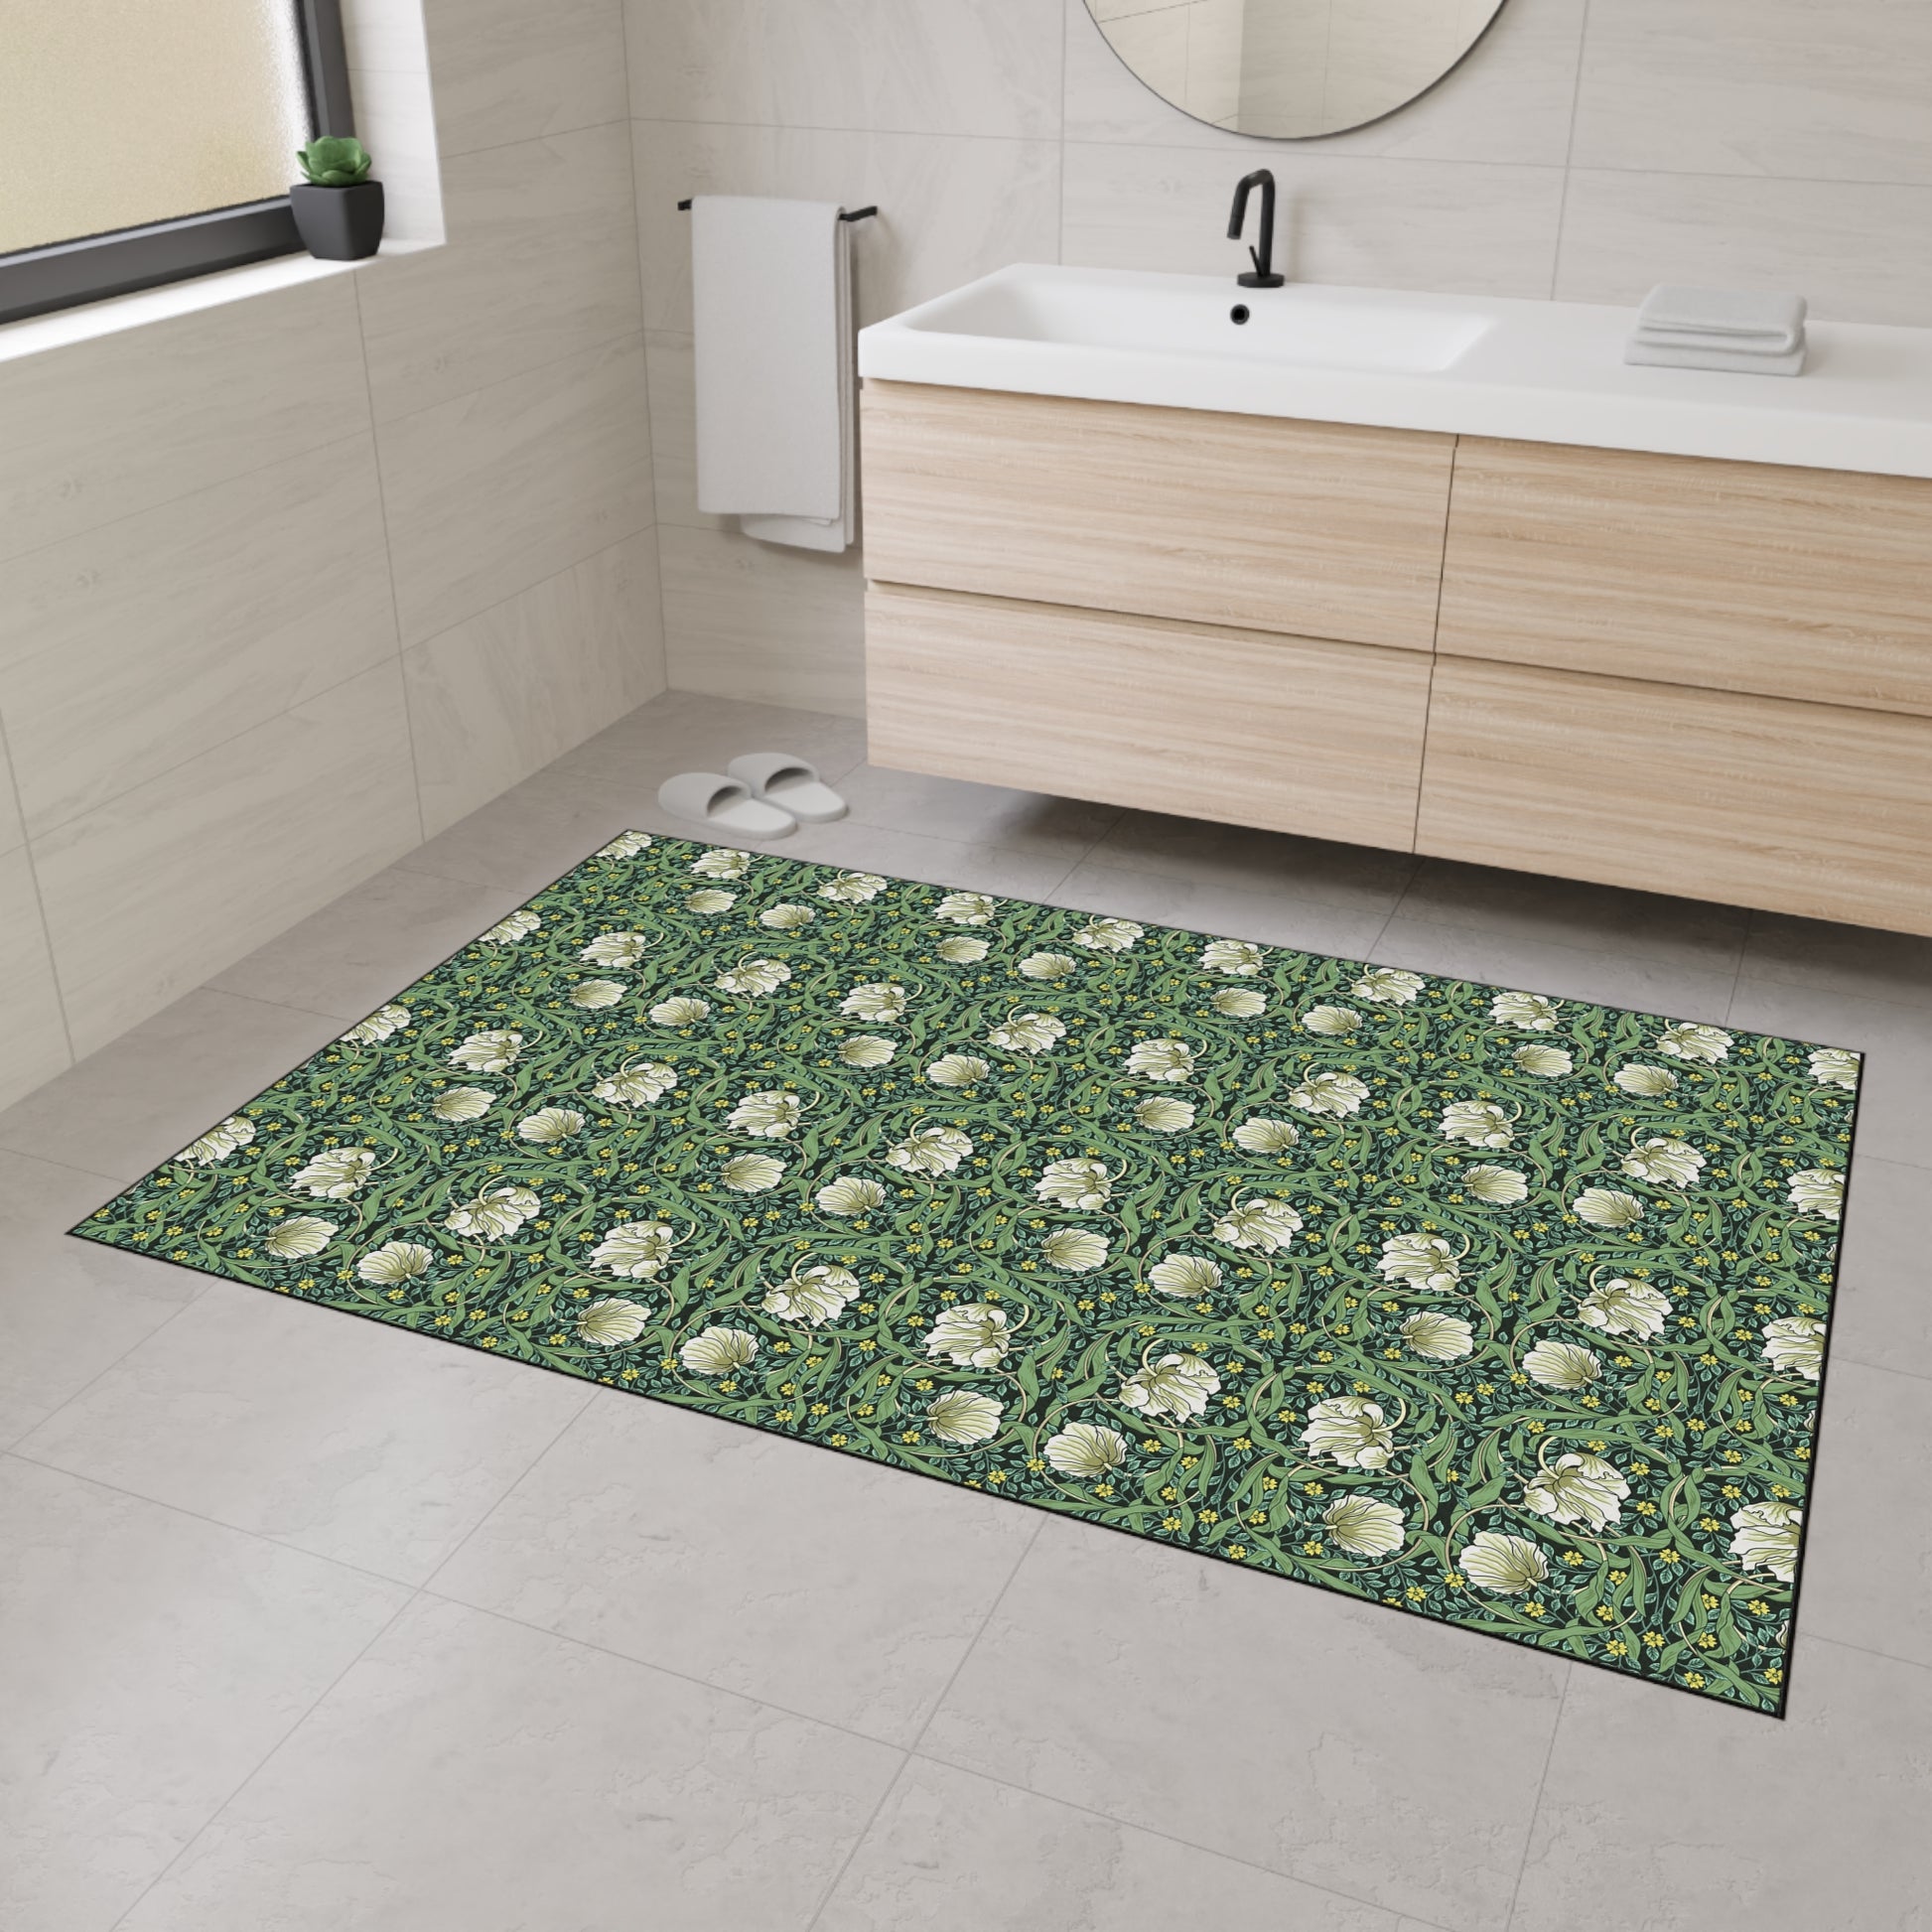 william-morris-co-heavy-duty-floor-mat-floor-mat-pimpernel-collection-green-8